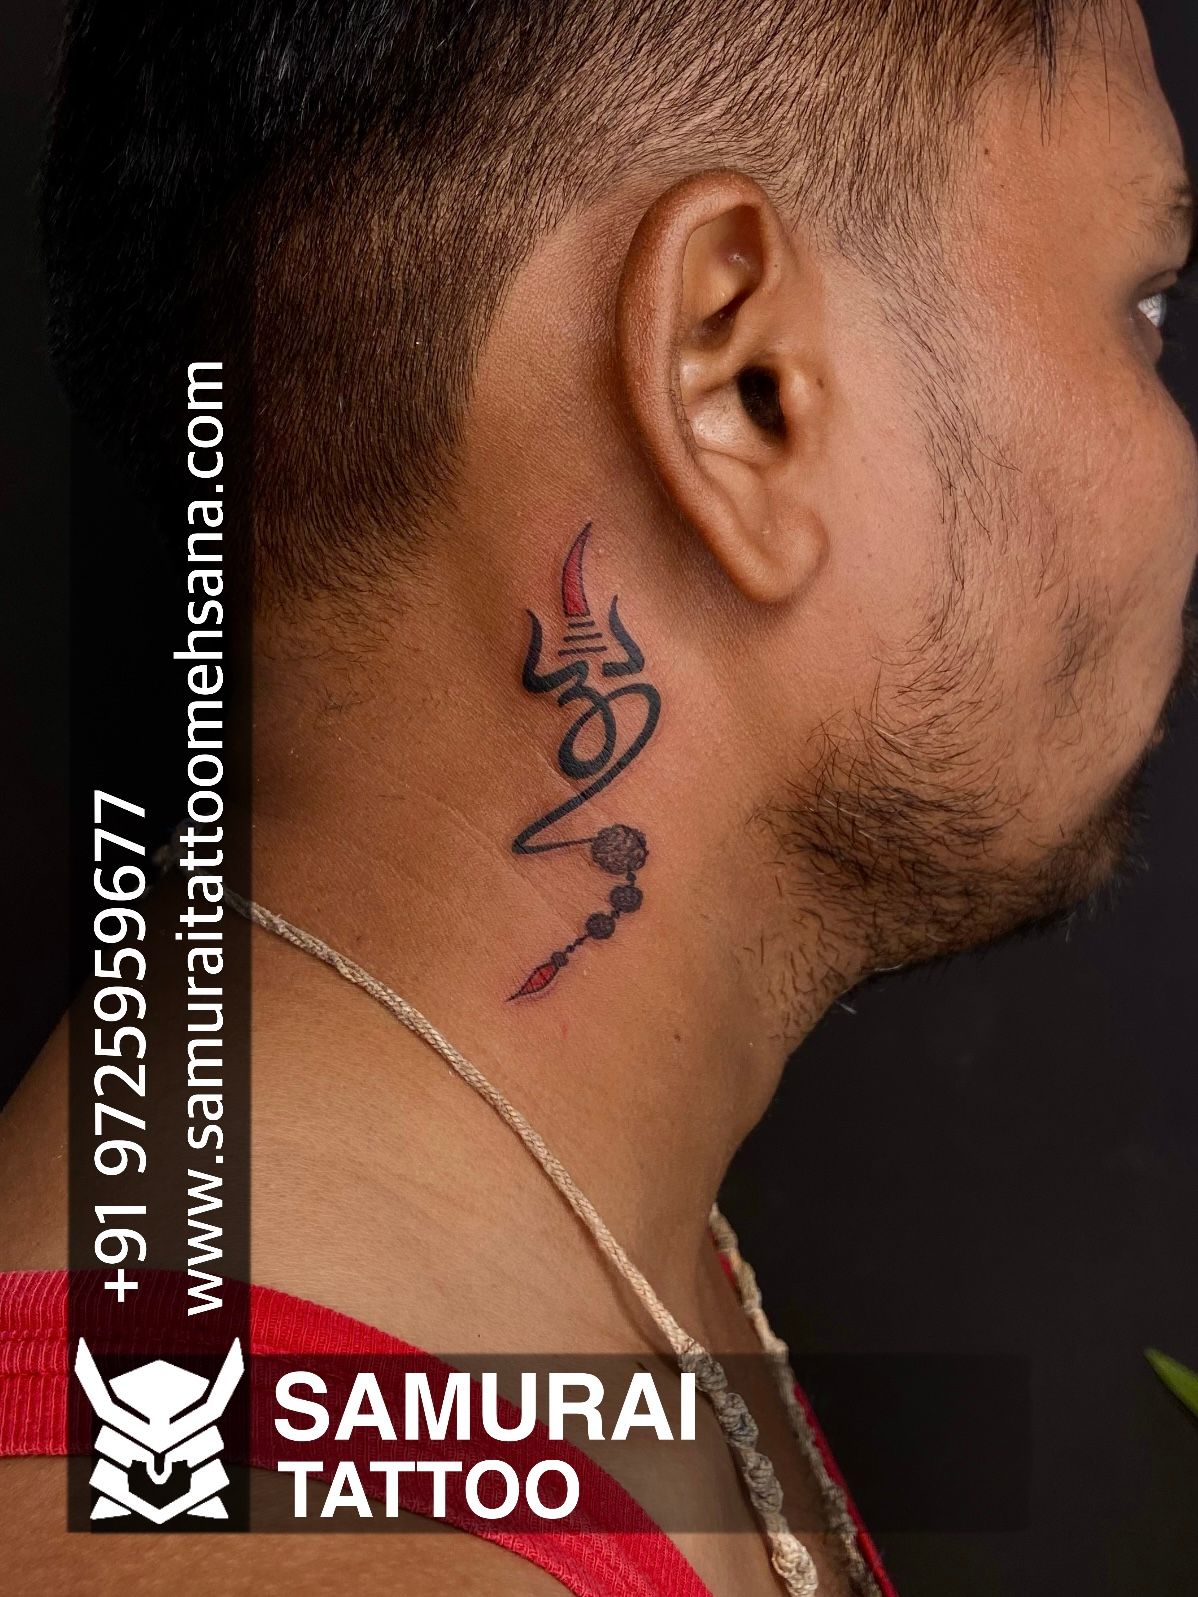 Tattoo uploaded by Vipul Chaudhary • Mahadev tattoo |Mahadev tattoo design  |Shiva tattoo |Shivji tattoo |Bholenath tattoo • Tattoodo